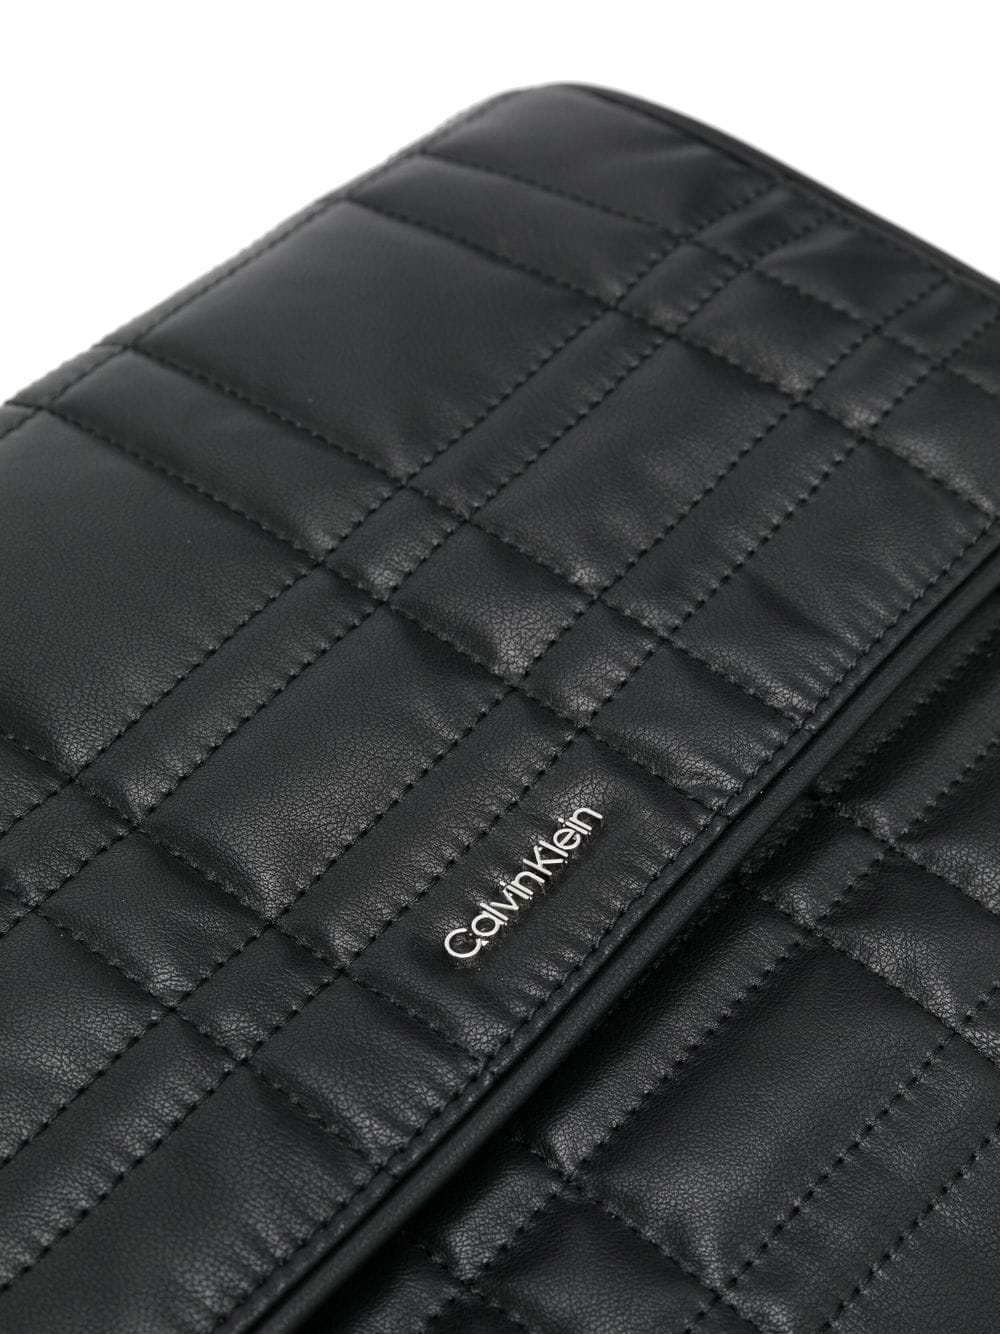 Calvin Klein Jeans Shoulder Bag CK Touch Shoulder Bag w/ Chain - Black - Women